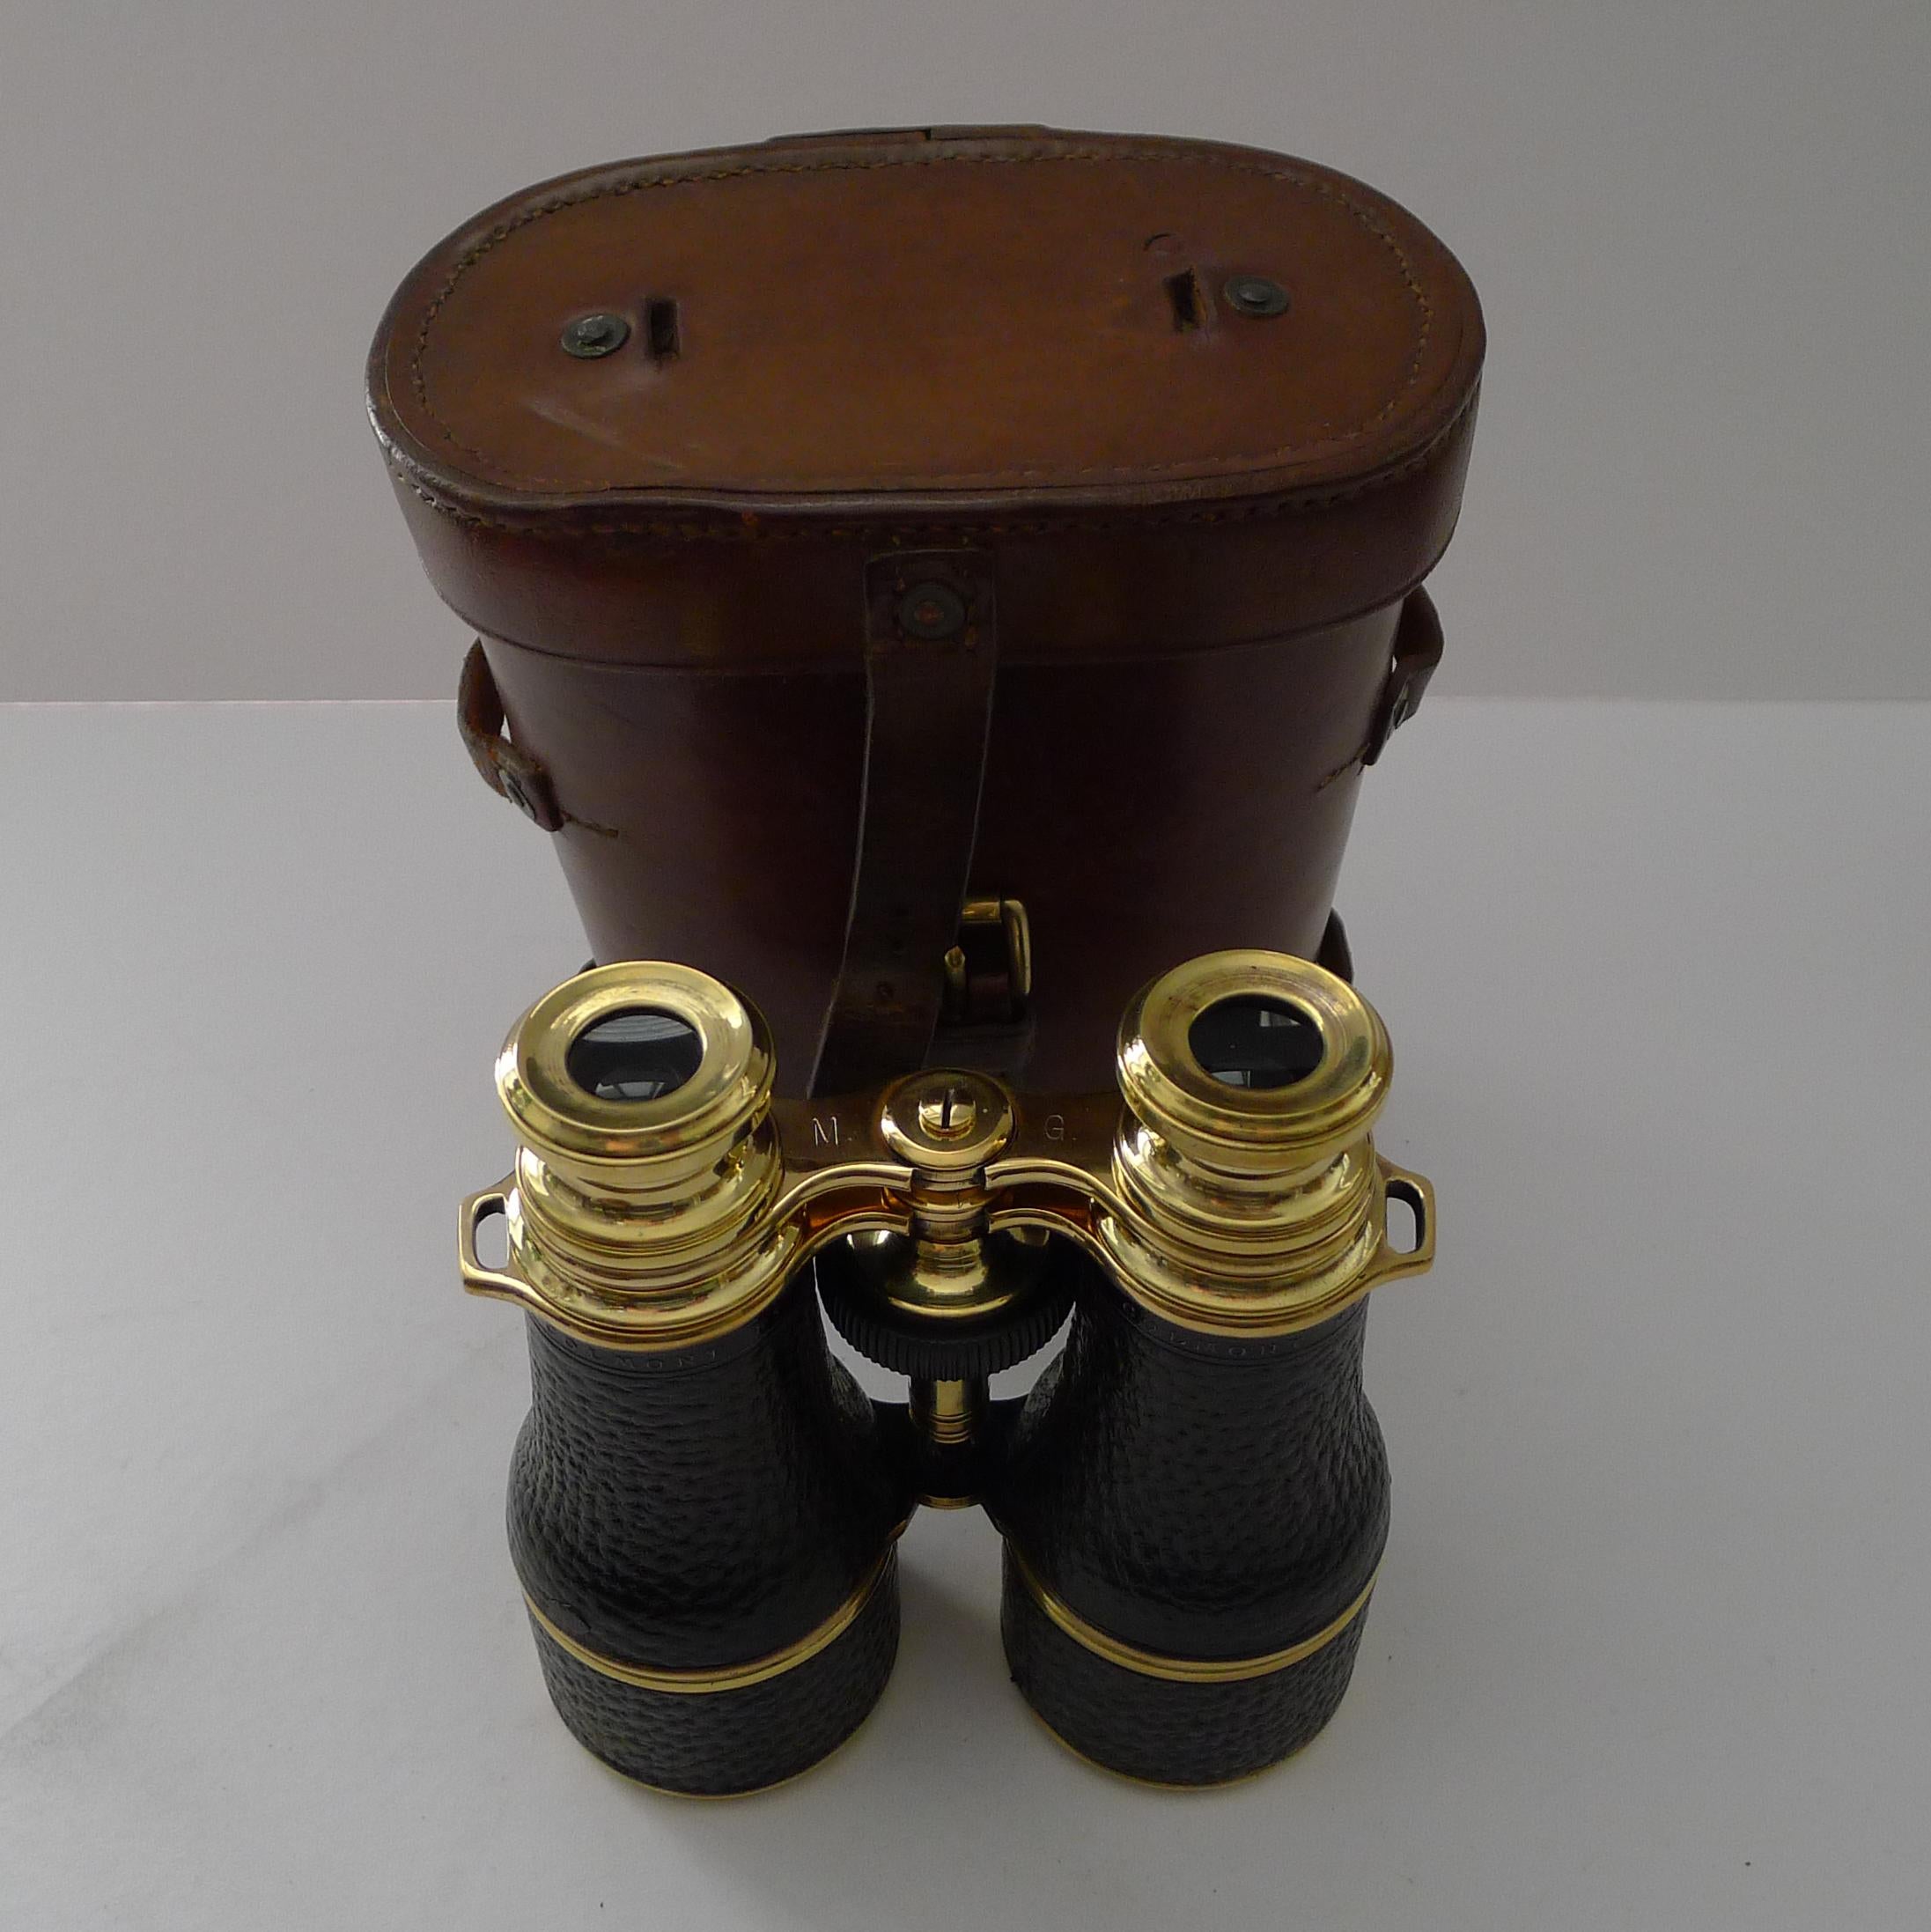 French Made WW1 Binoculars for British Military Issue, c.1917 1